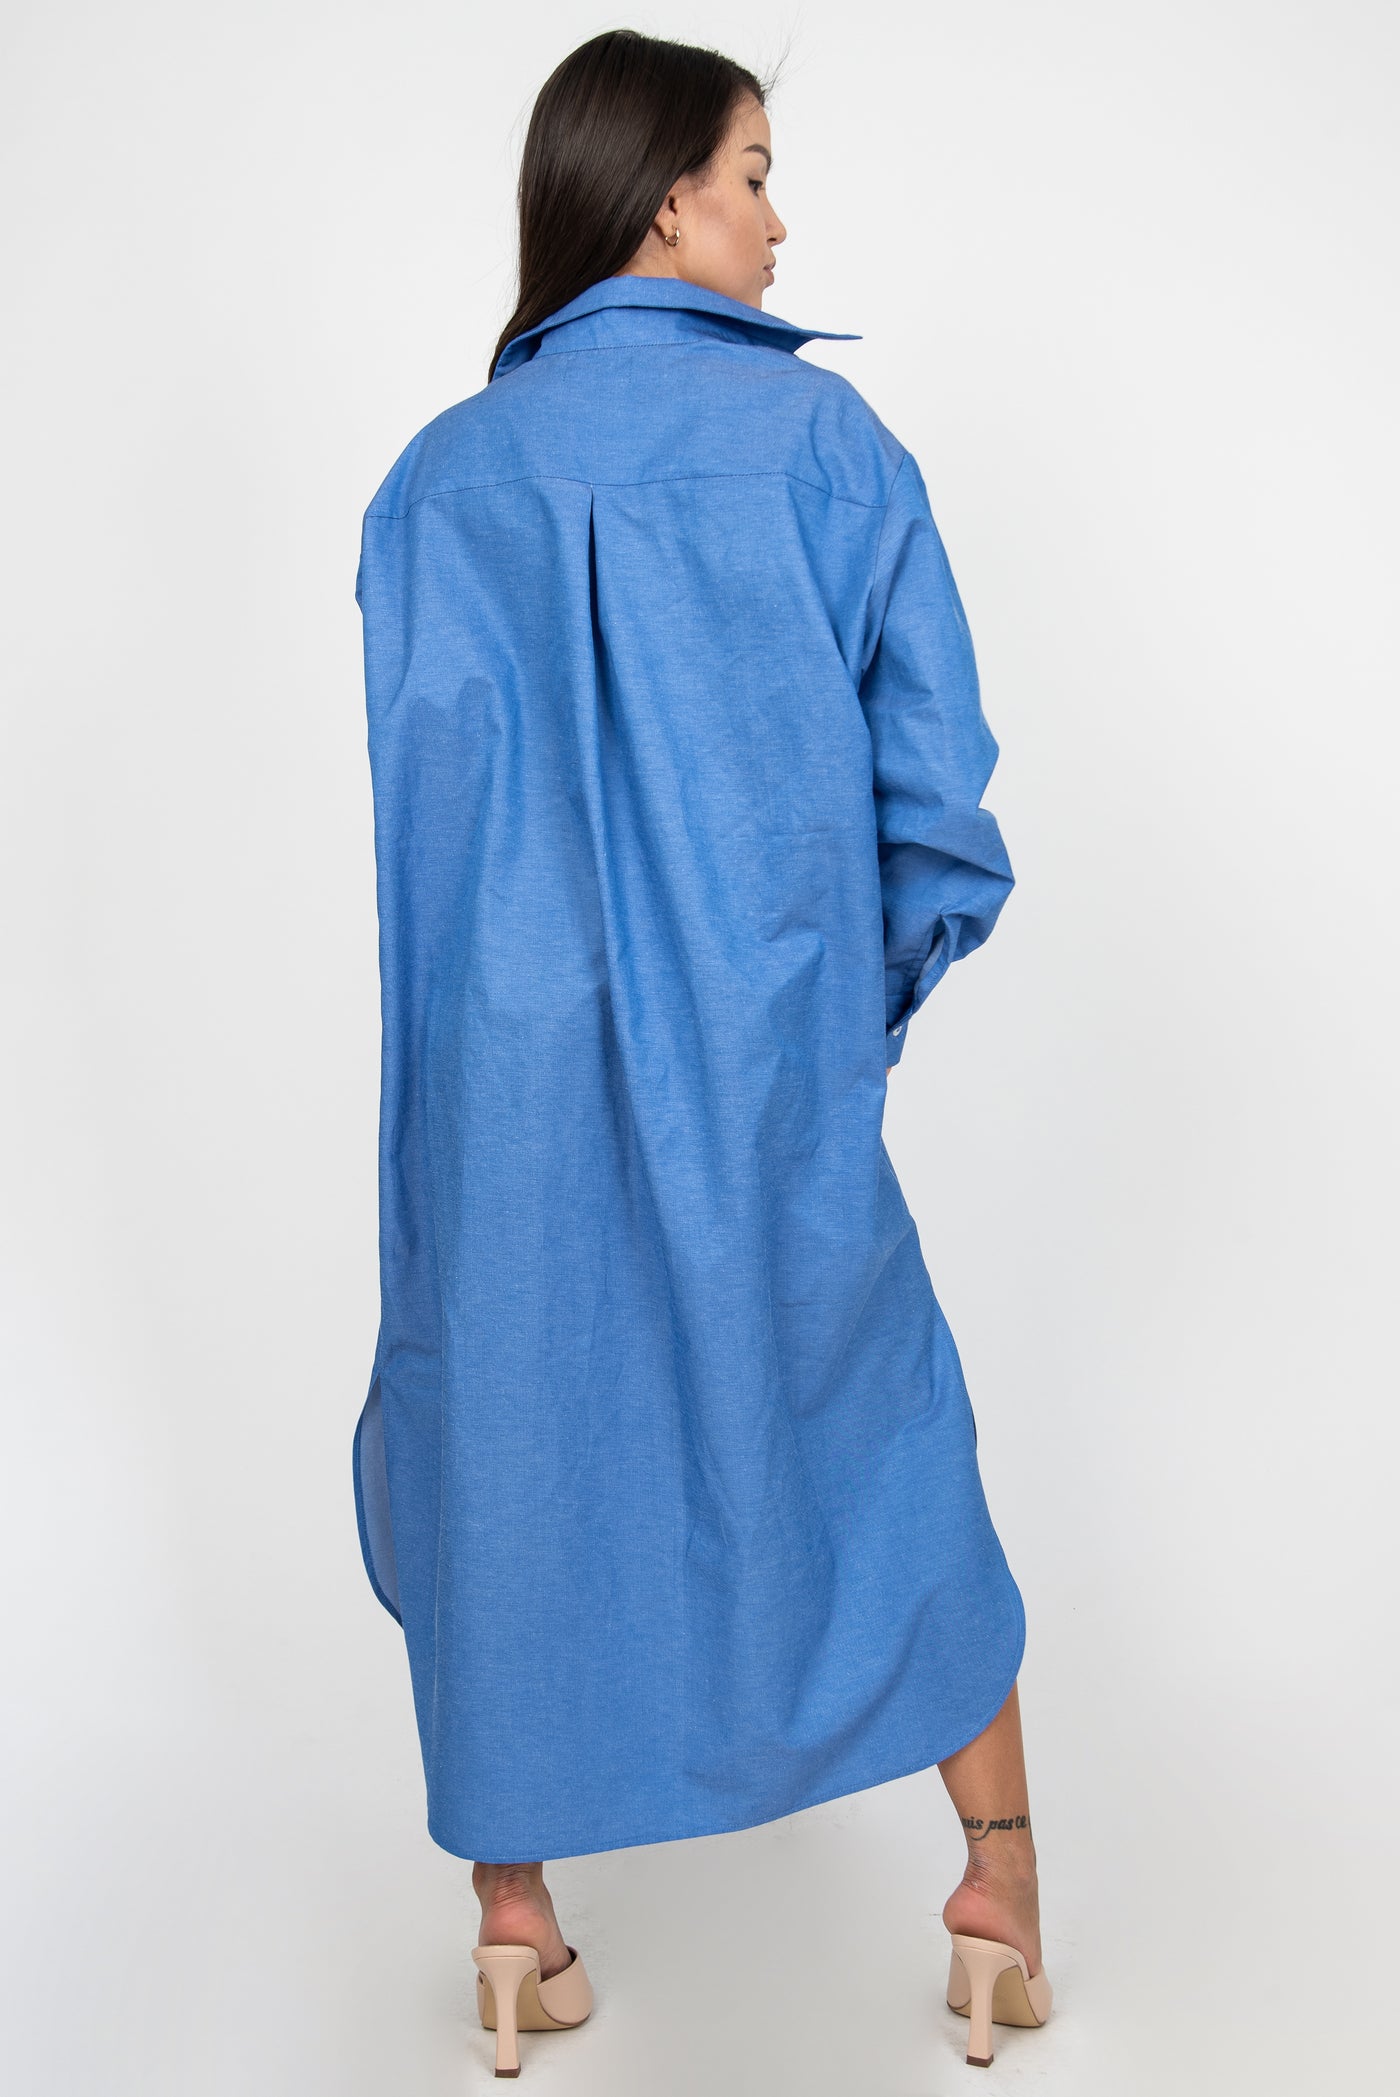 Blue oversized shirt F2407